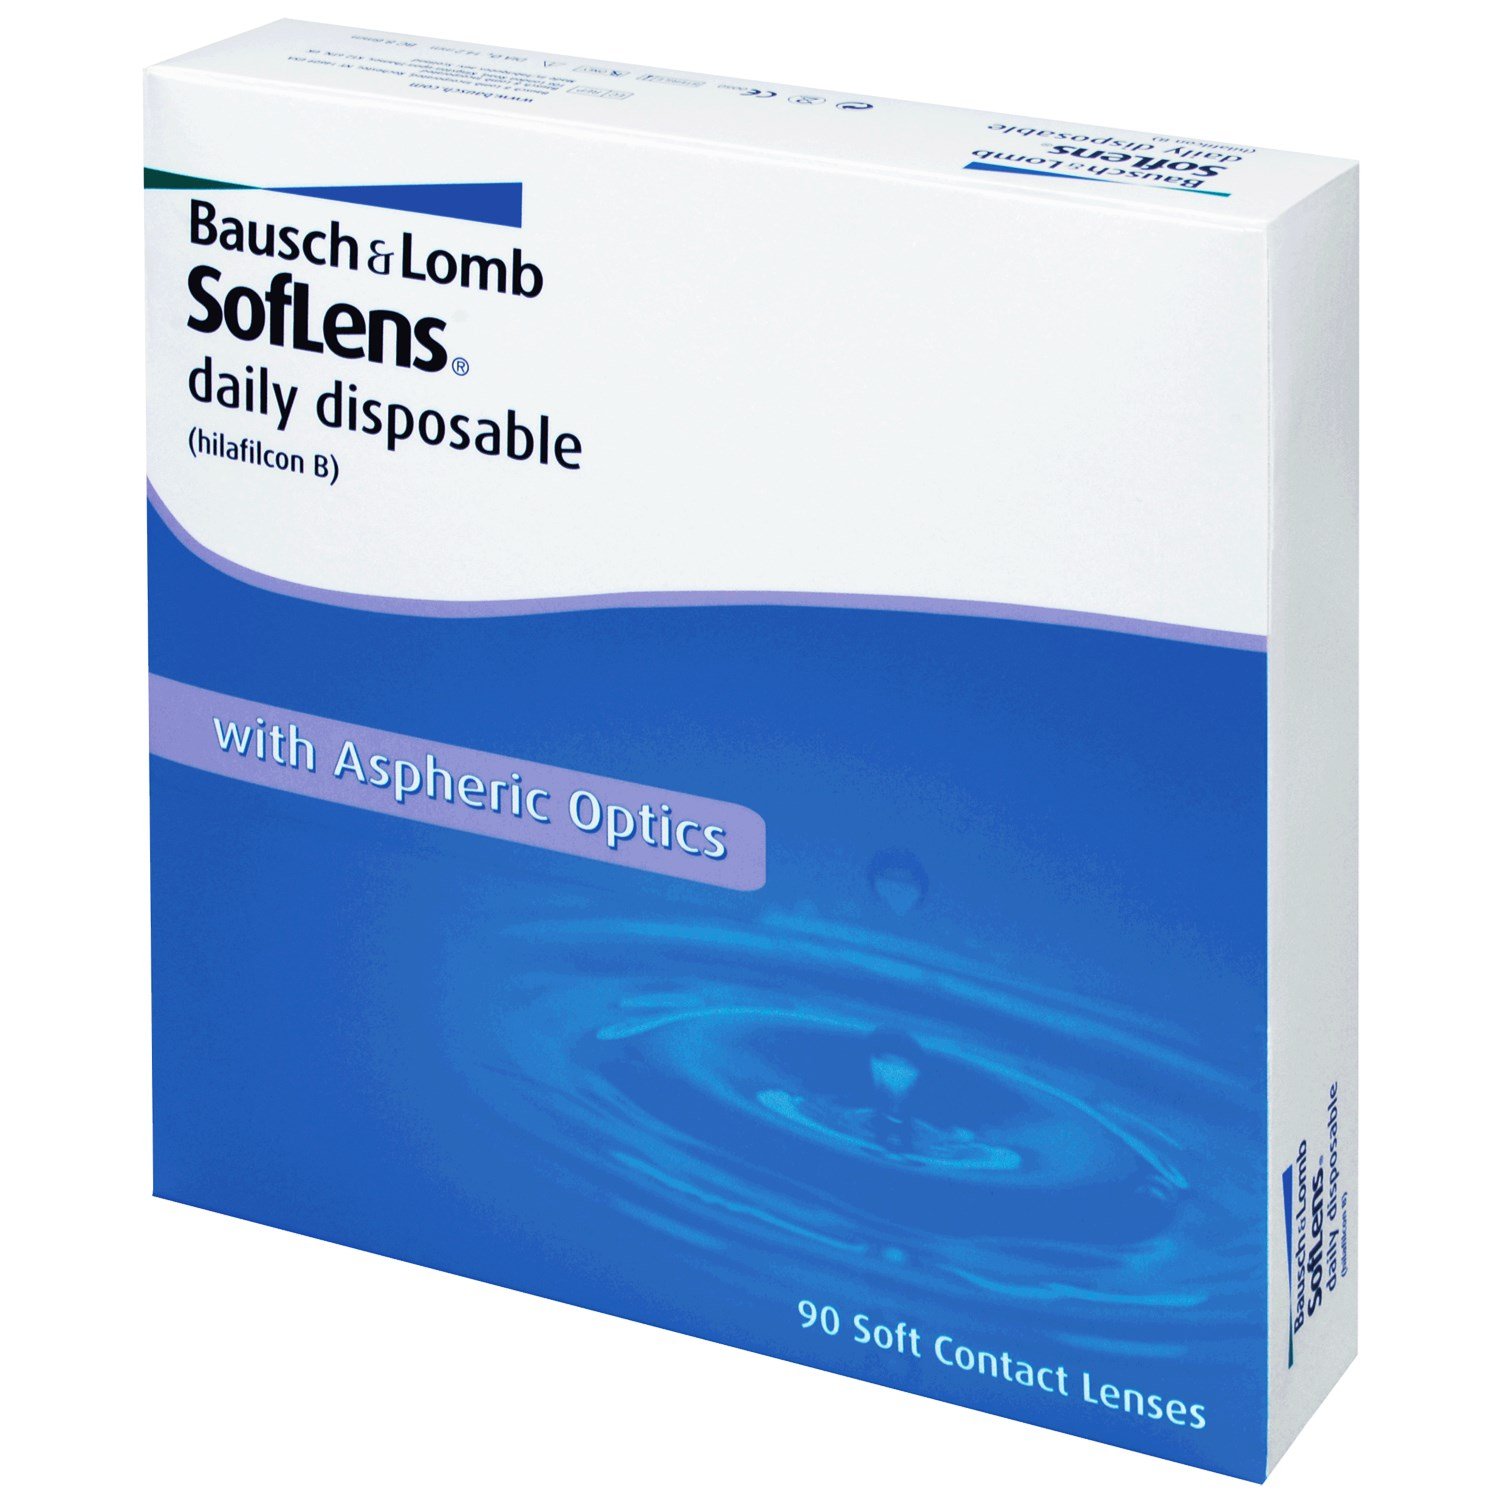 SofLens daily disposable 90pk contact lenses